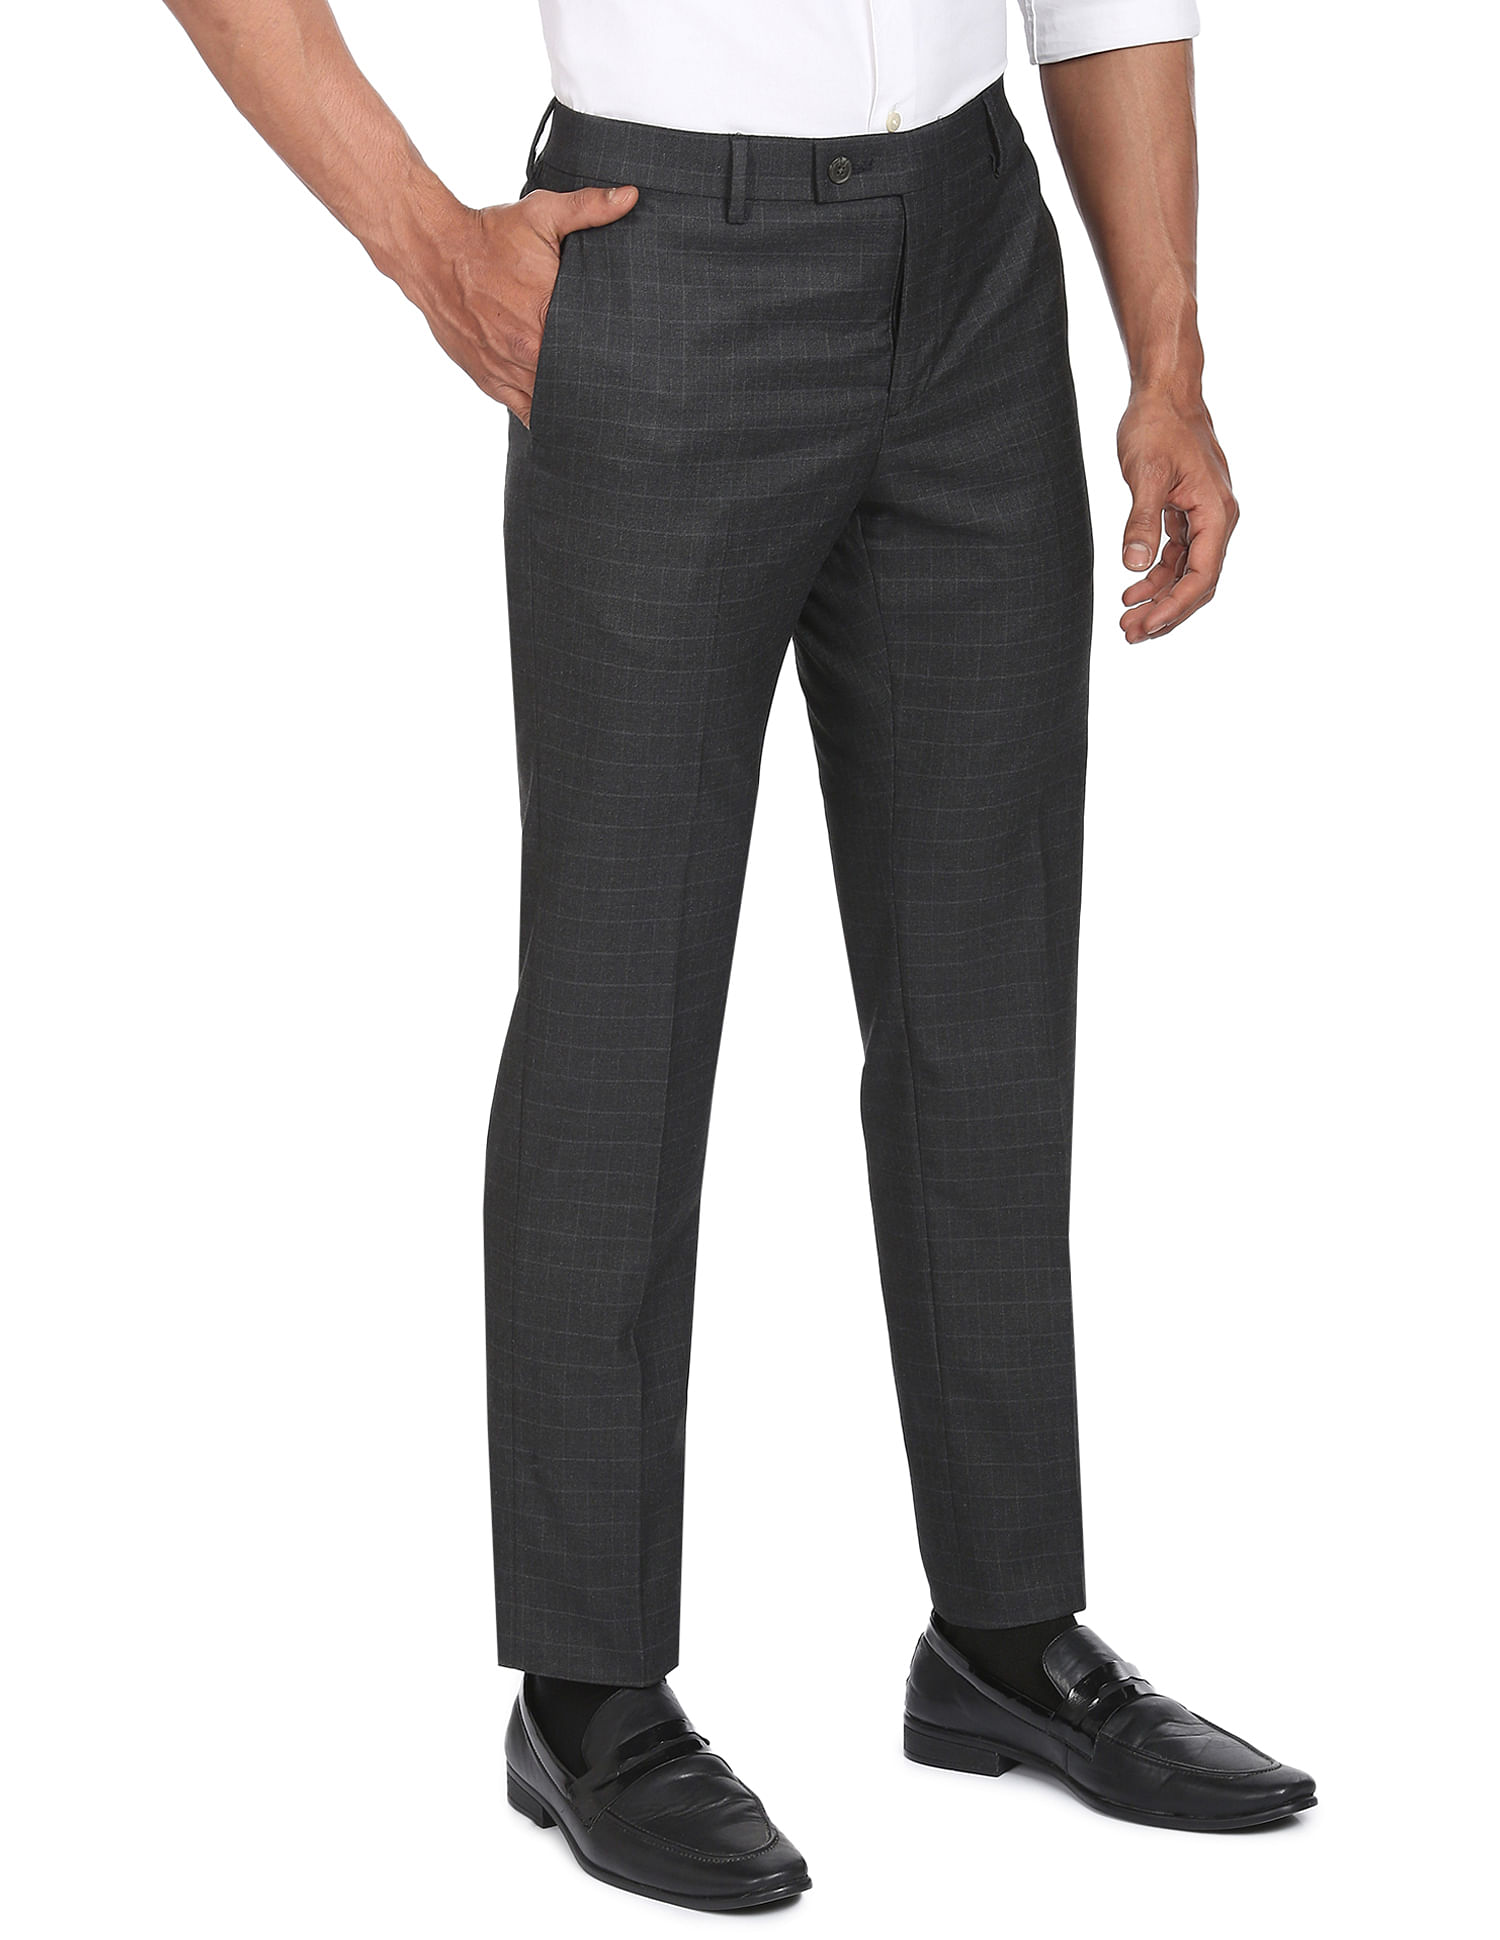 Buy Beige Trousers & Pants for Men by ARROW Online | Ajio.com